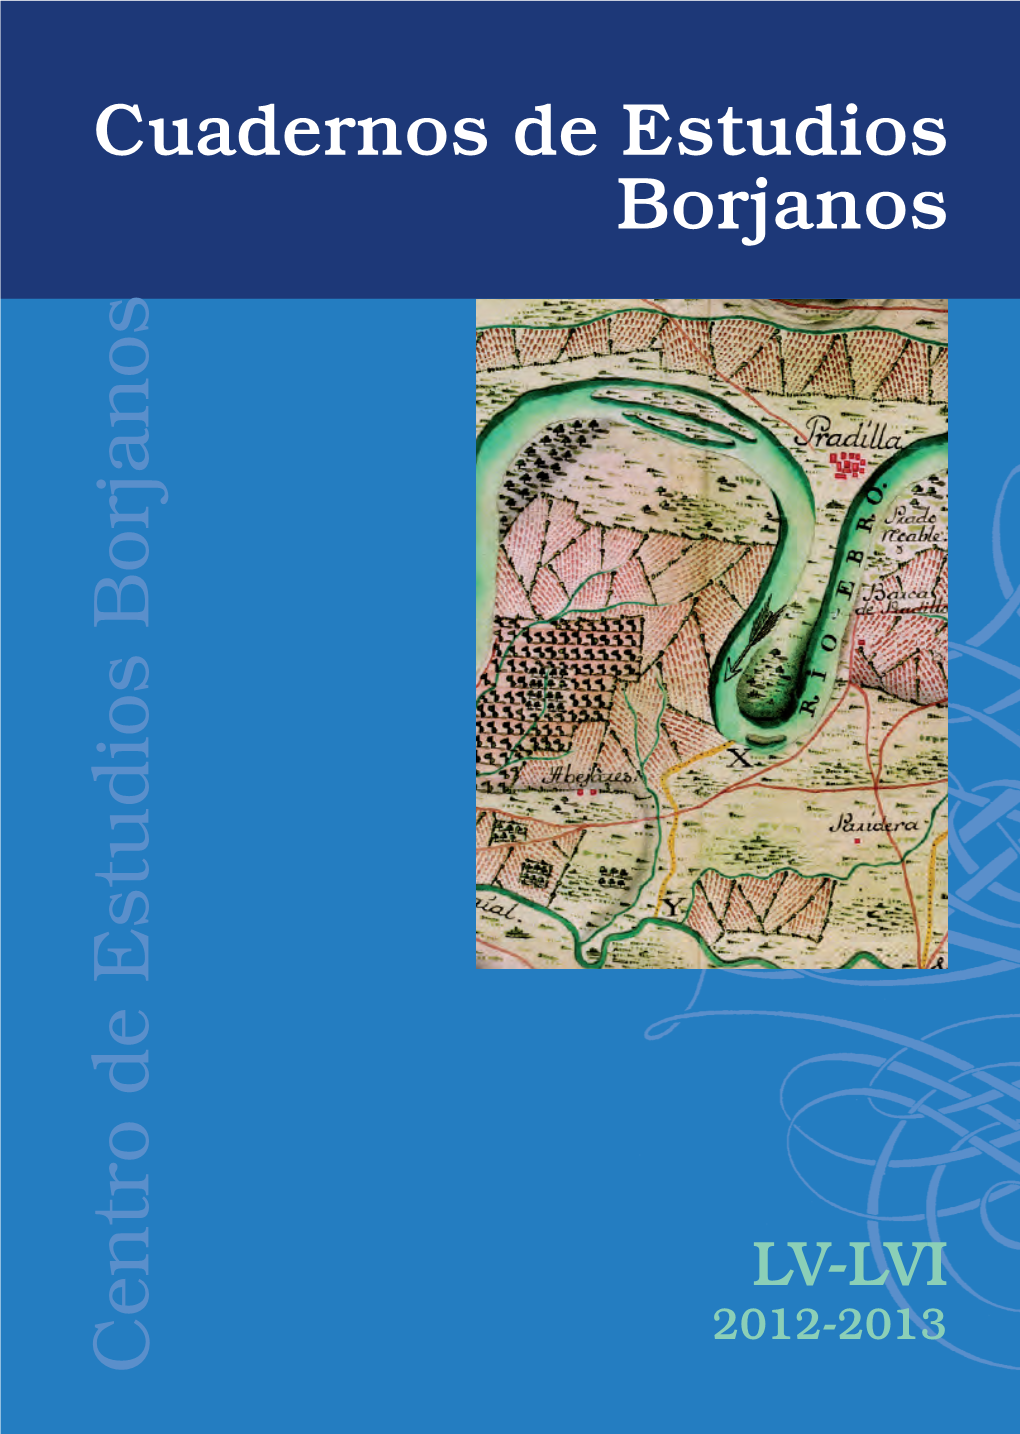 Cuadernos De Estudios Borjanos, LV-LVI